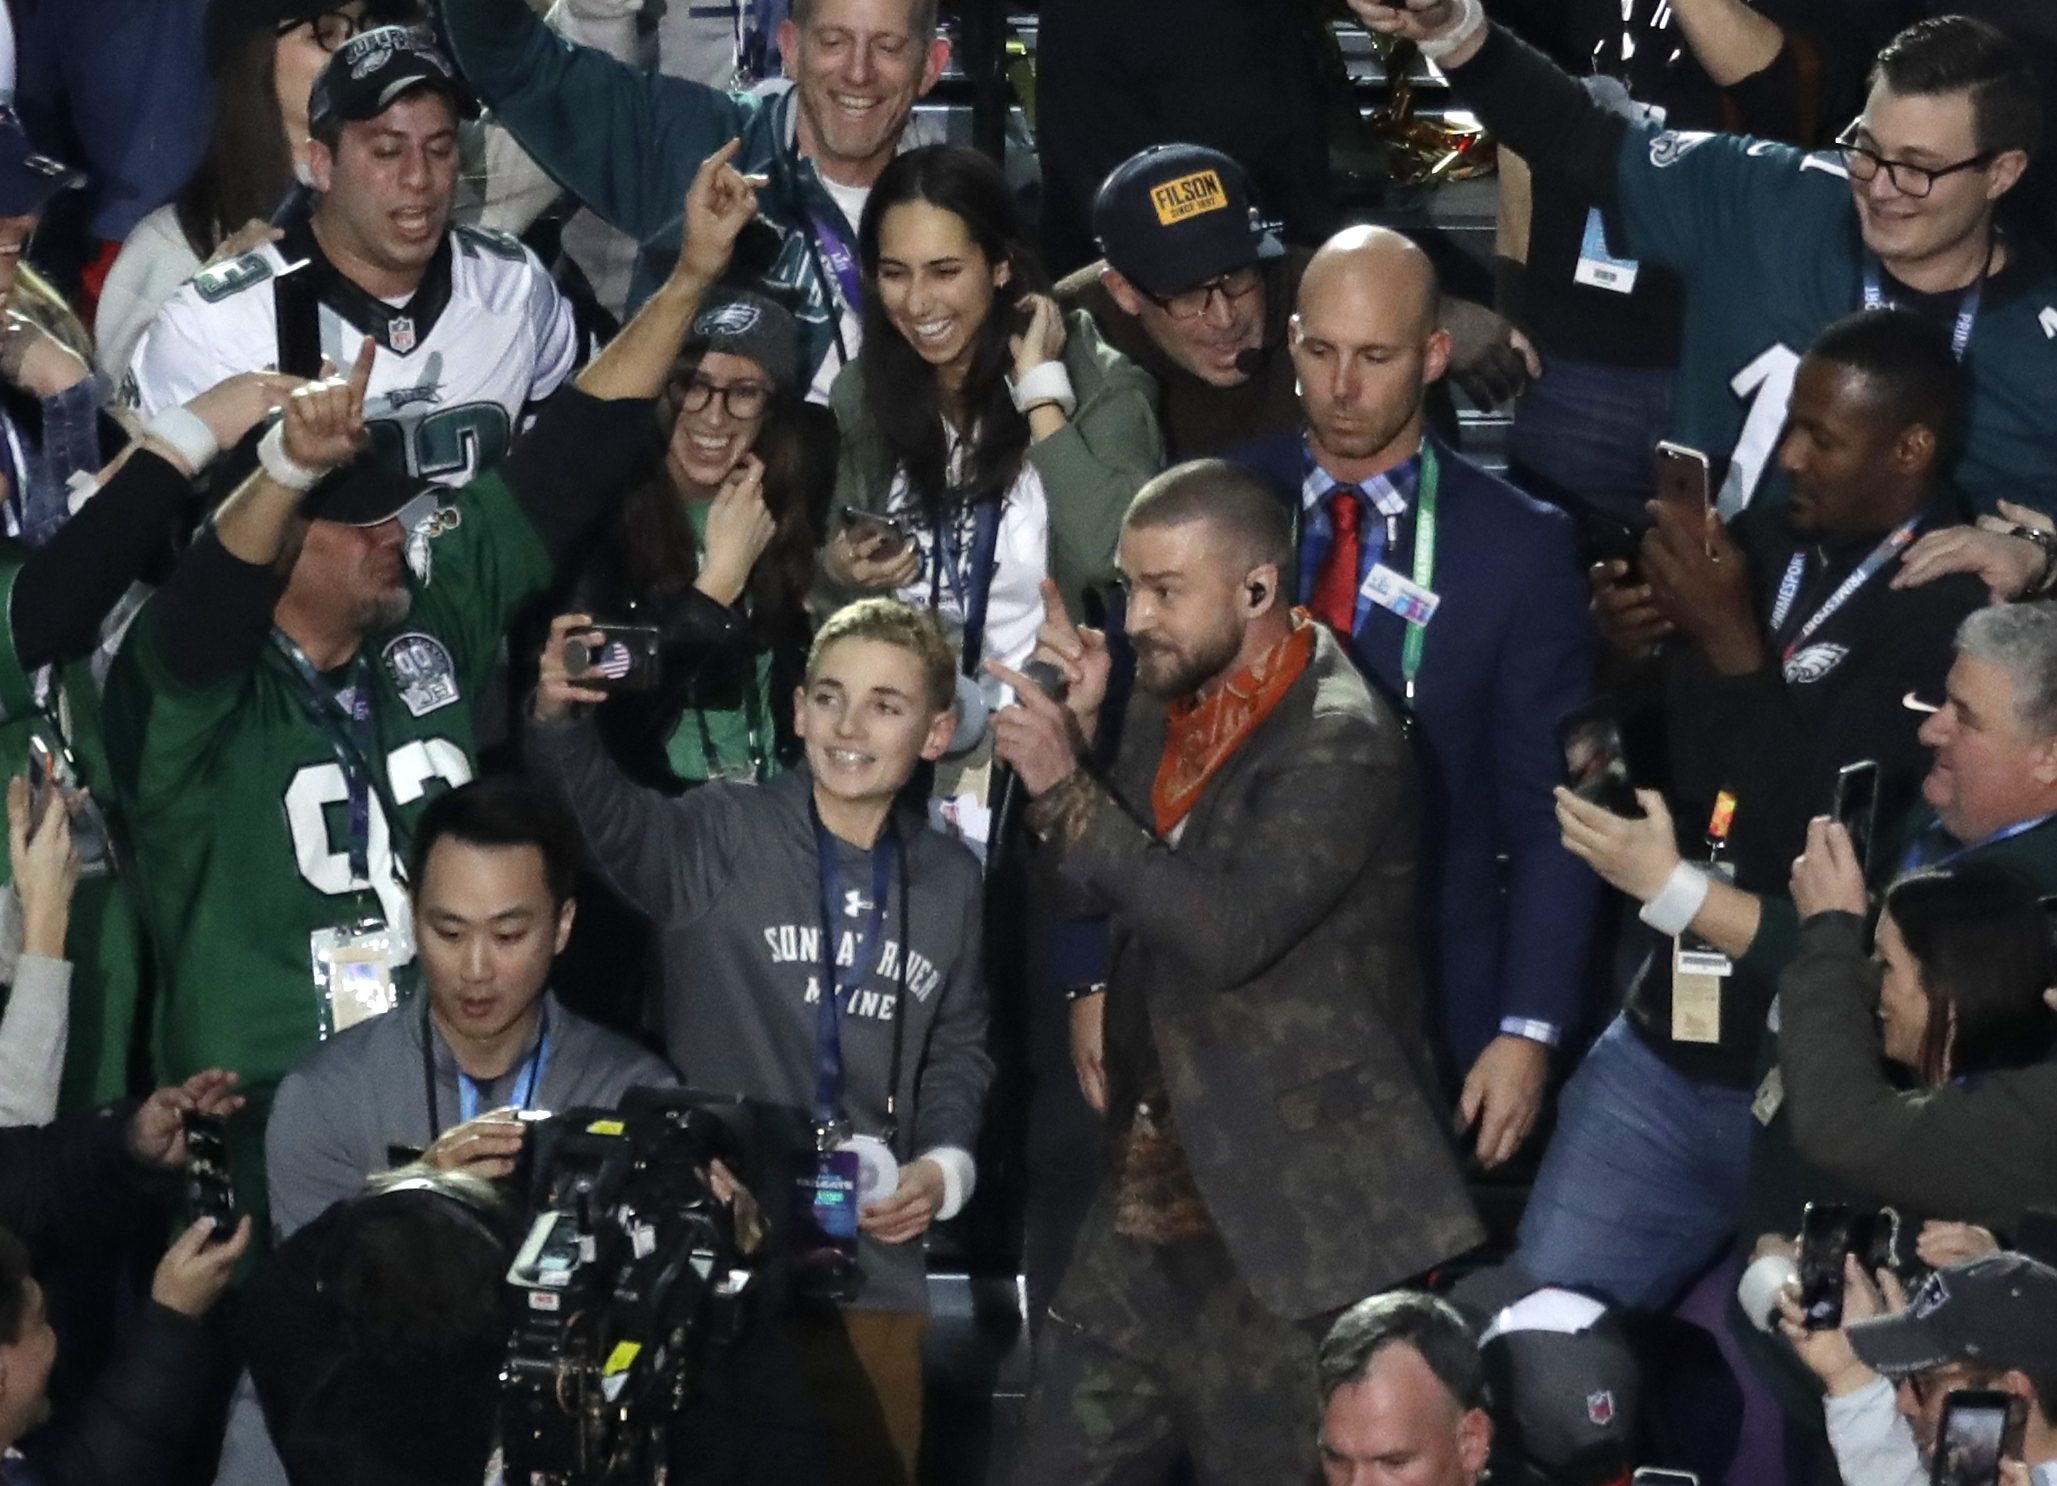 Justin Timberlake selfie kid is the Super Bowl's biggest meme